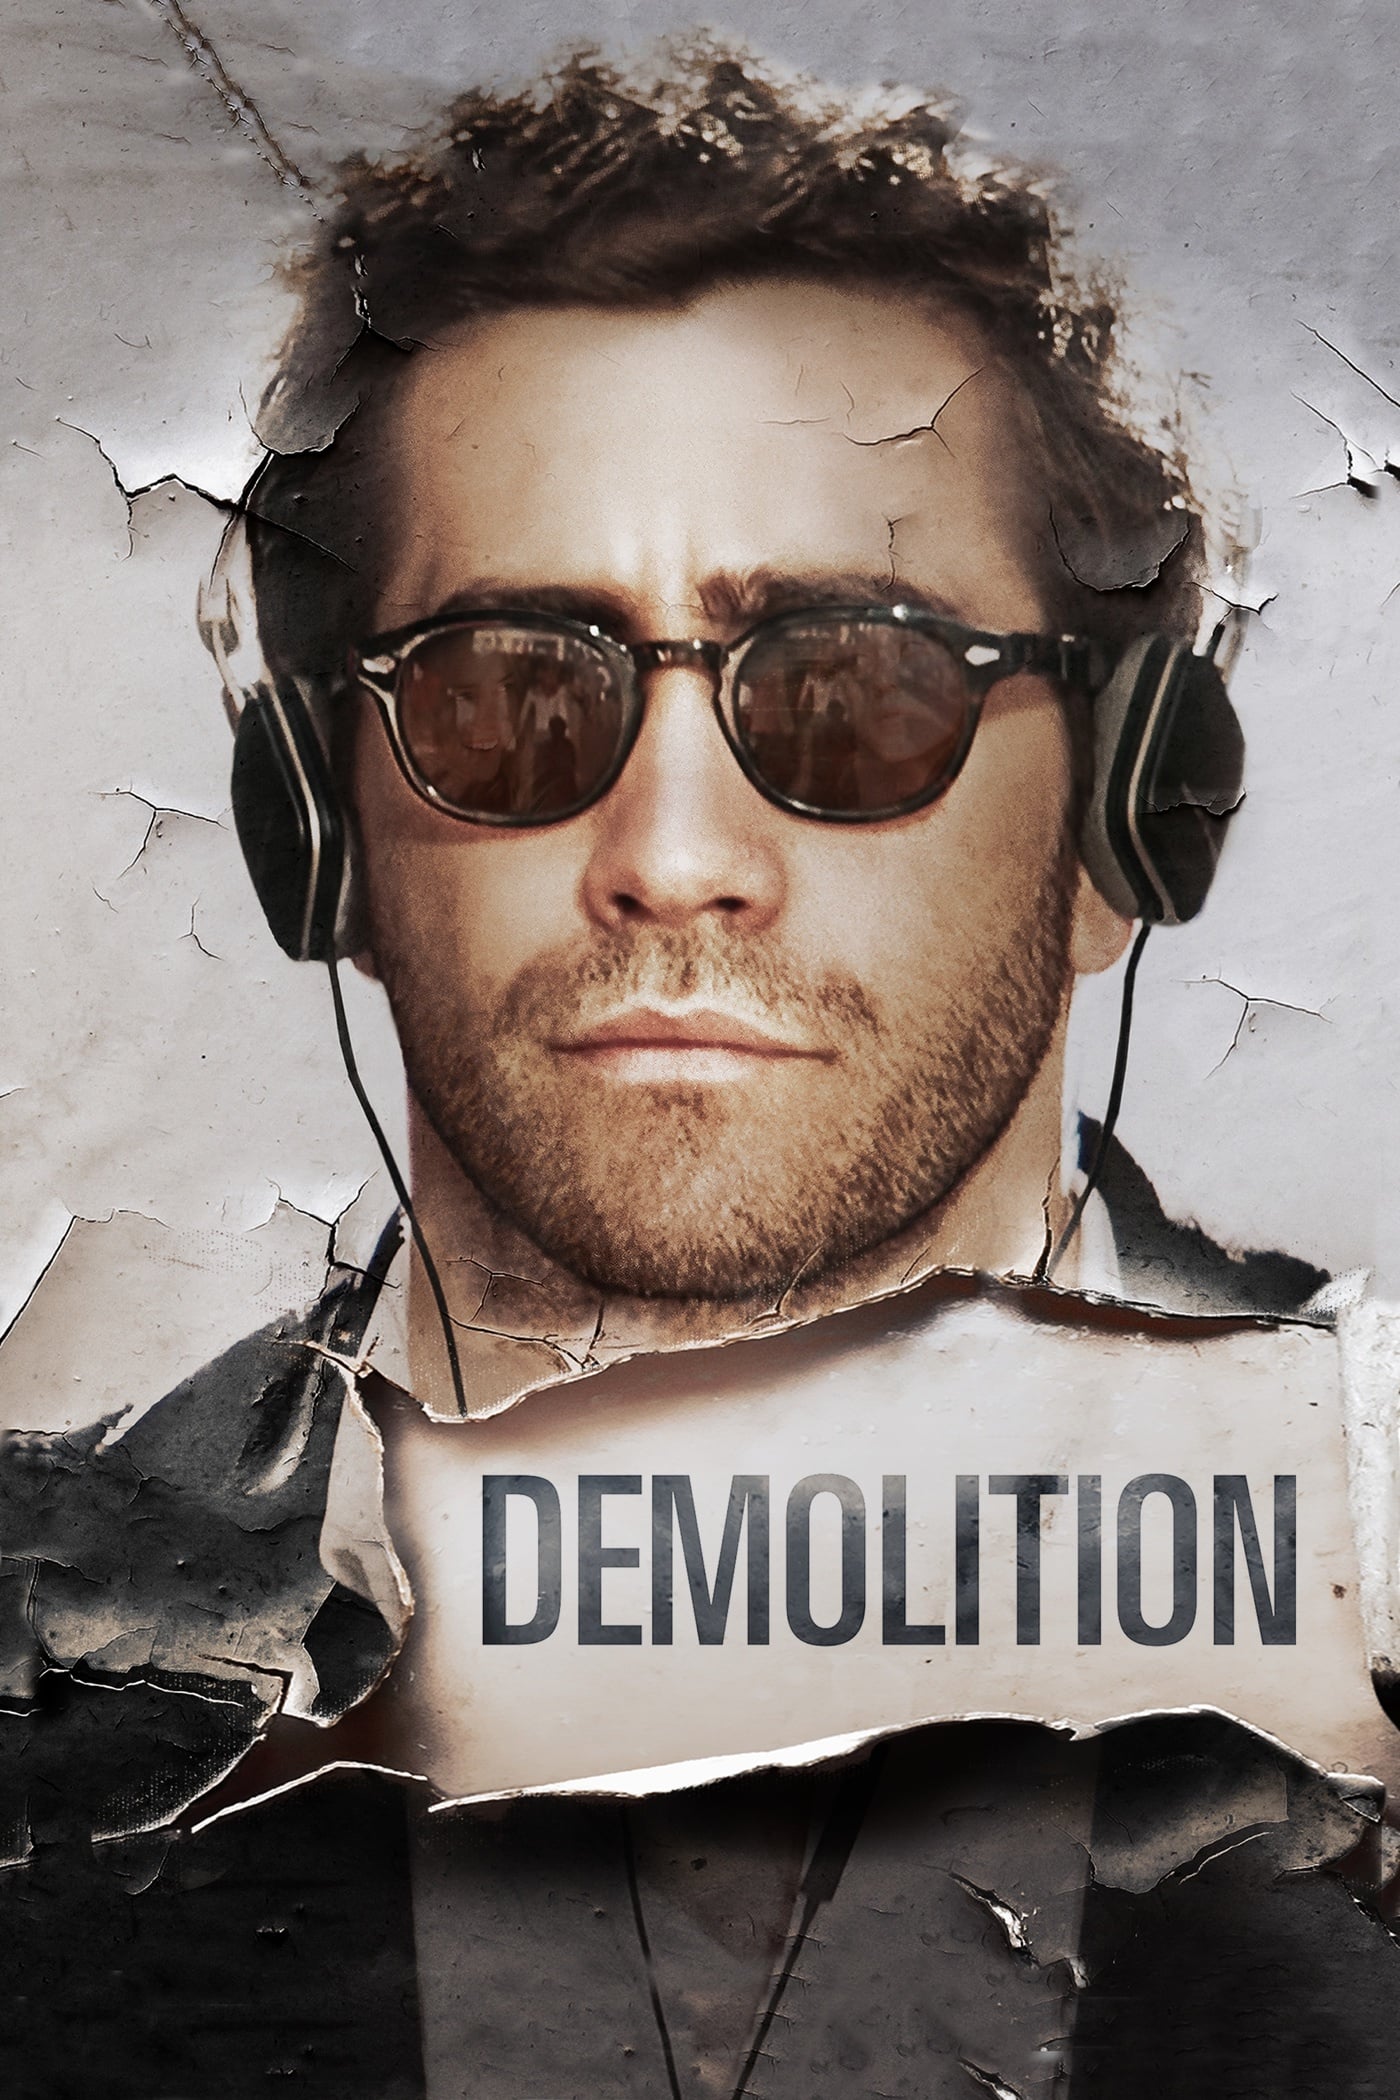 download demolition man full movie free